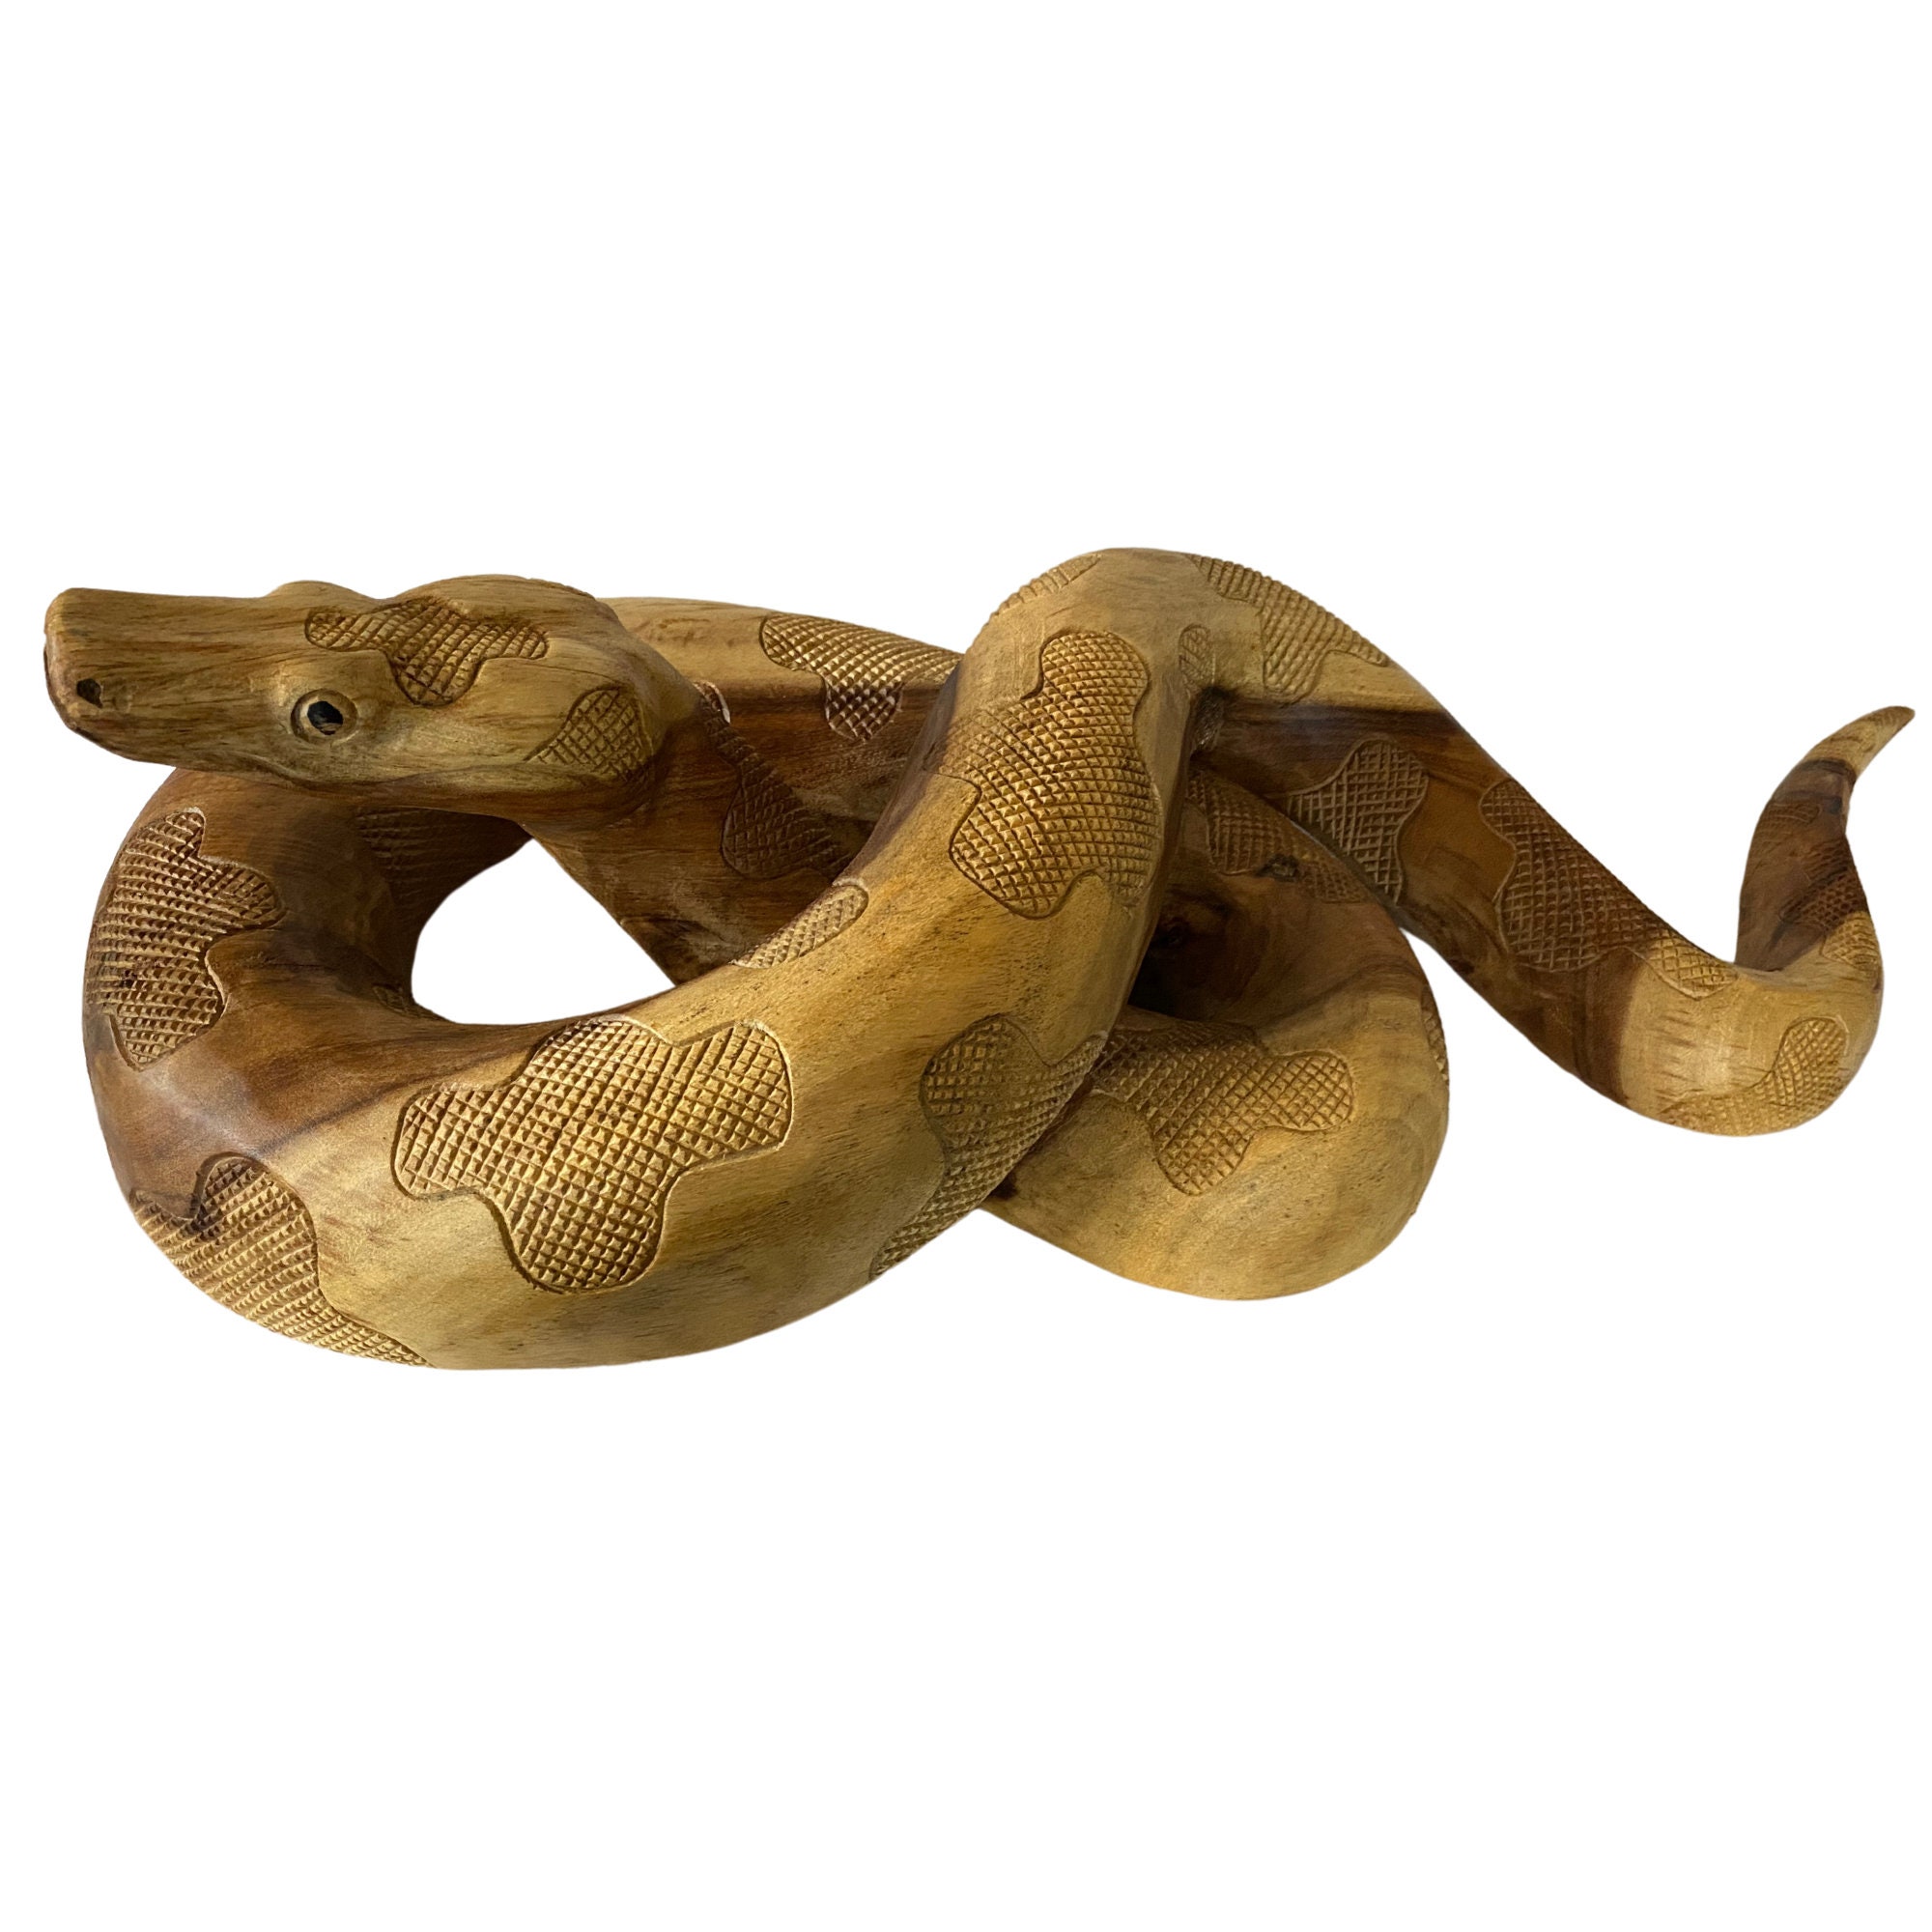 Python, boa - mini statuette snake of bronze, metal figurine